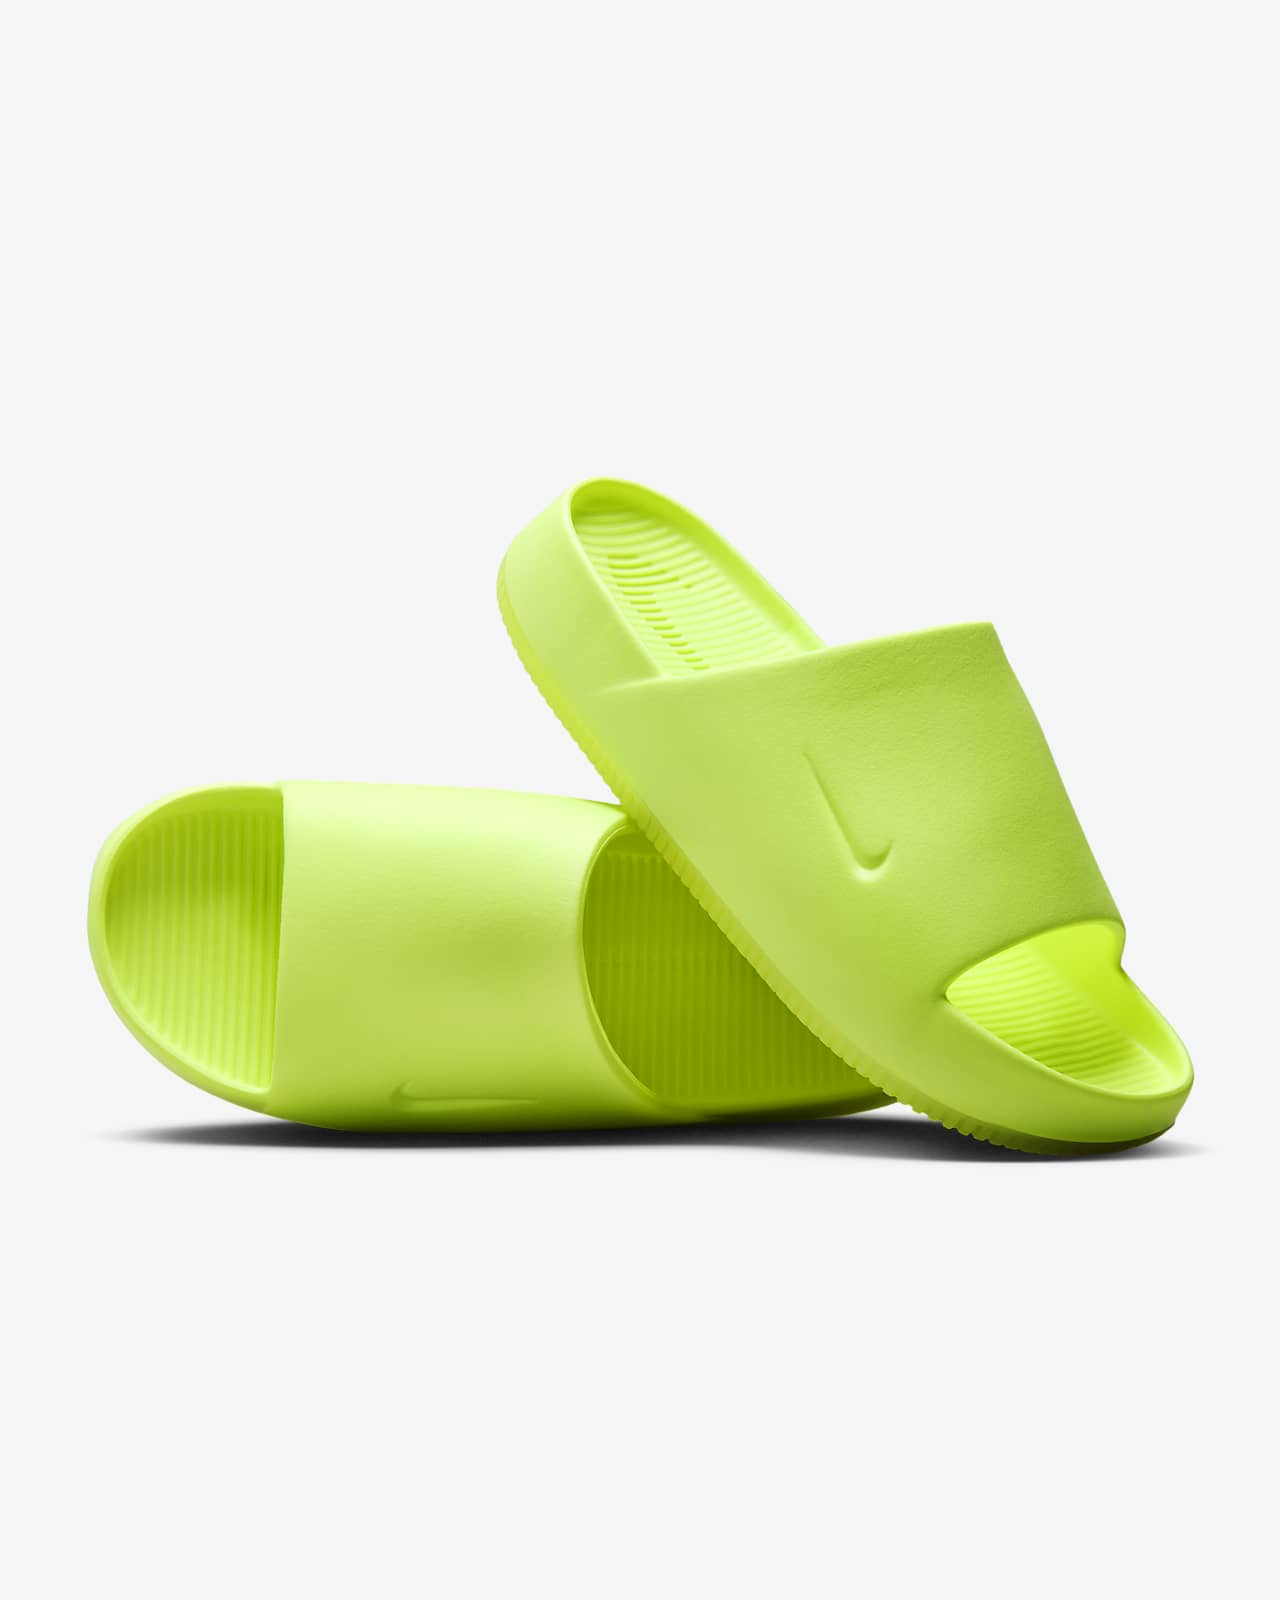 Nike Announces Calm Slide in Rugged Orange Color